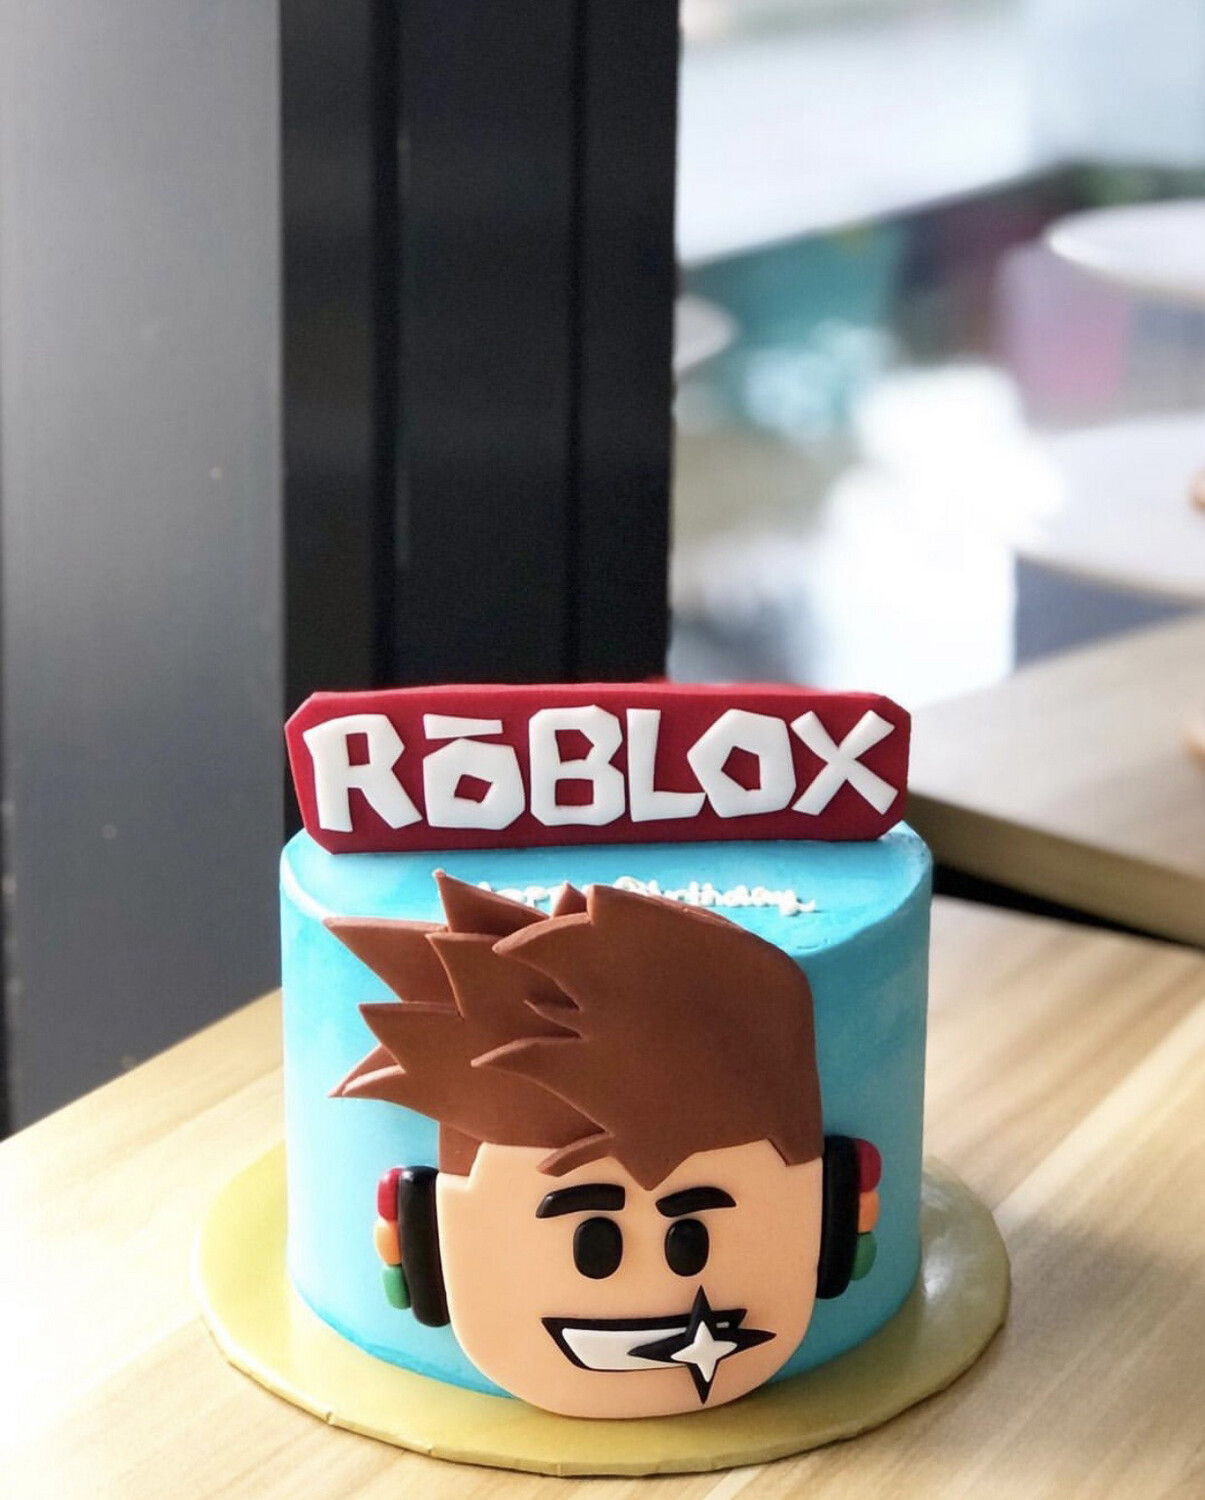 Roblox Cake 1